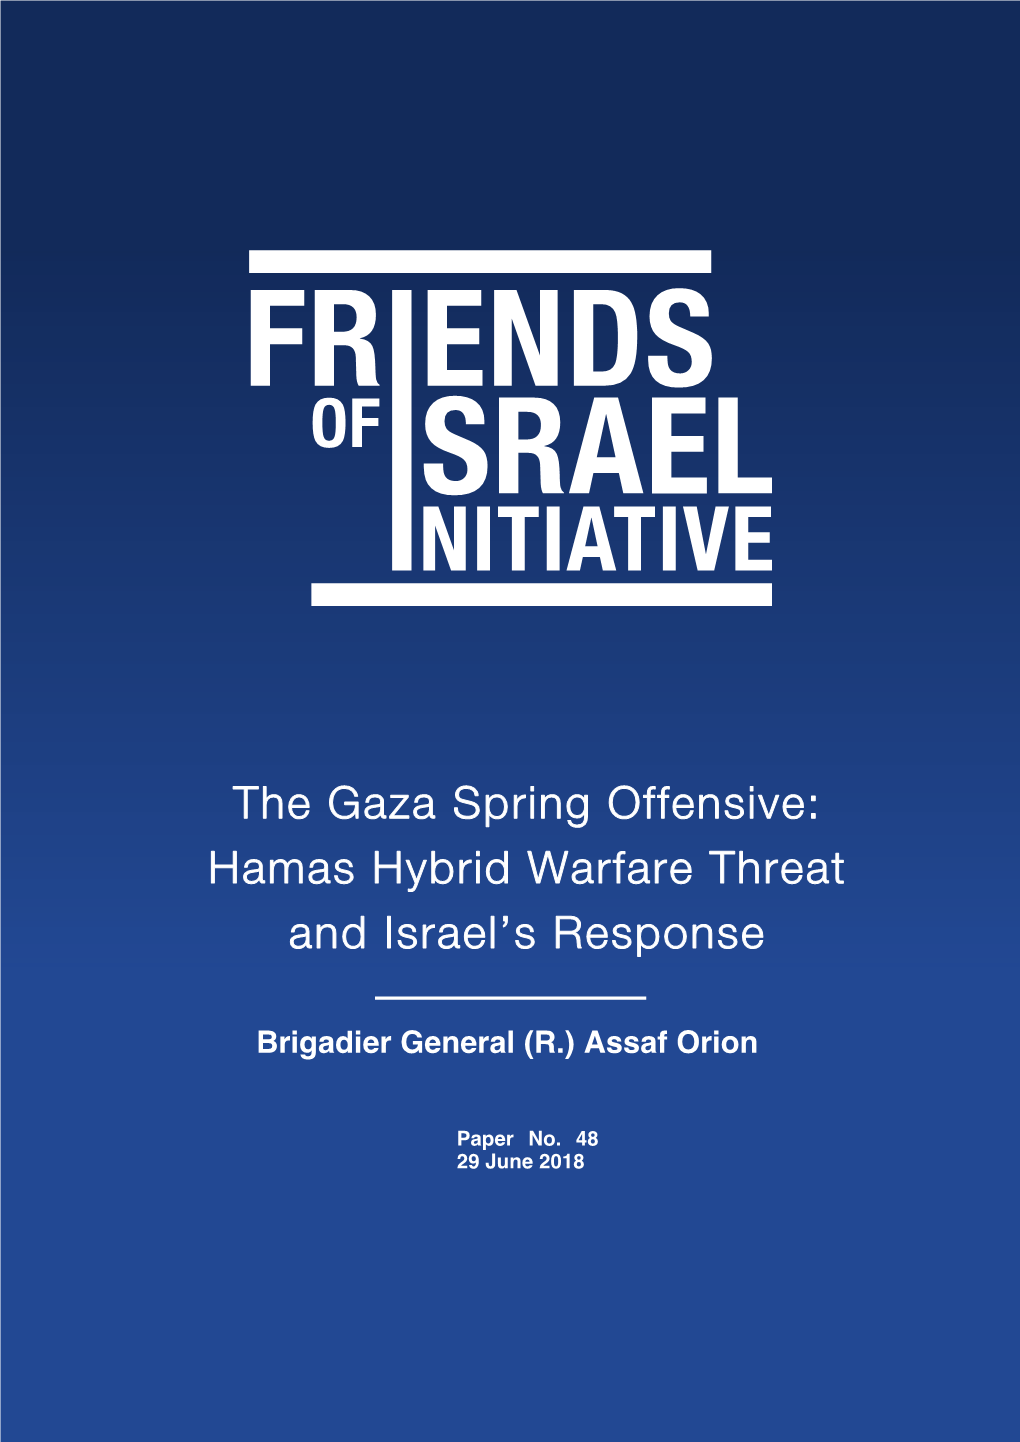 The Gaza Spring Offensive: Hamas Hybrid Warfare Threat and Israel's Response